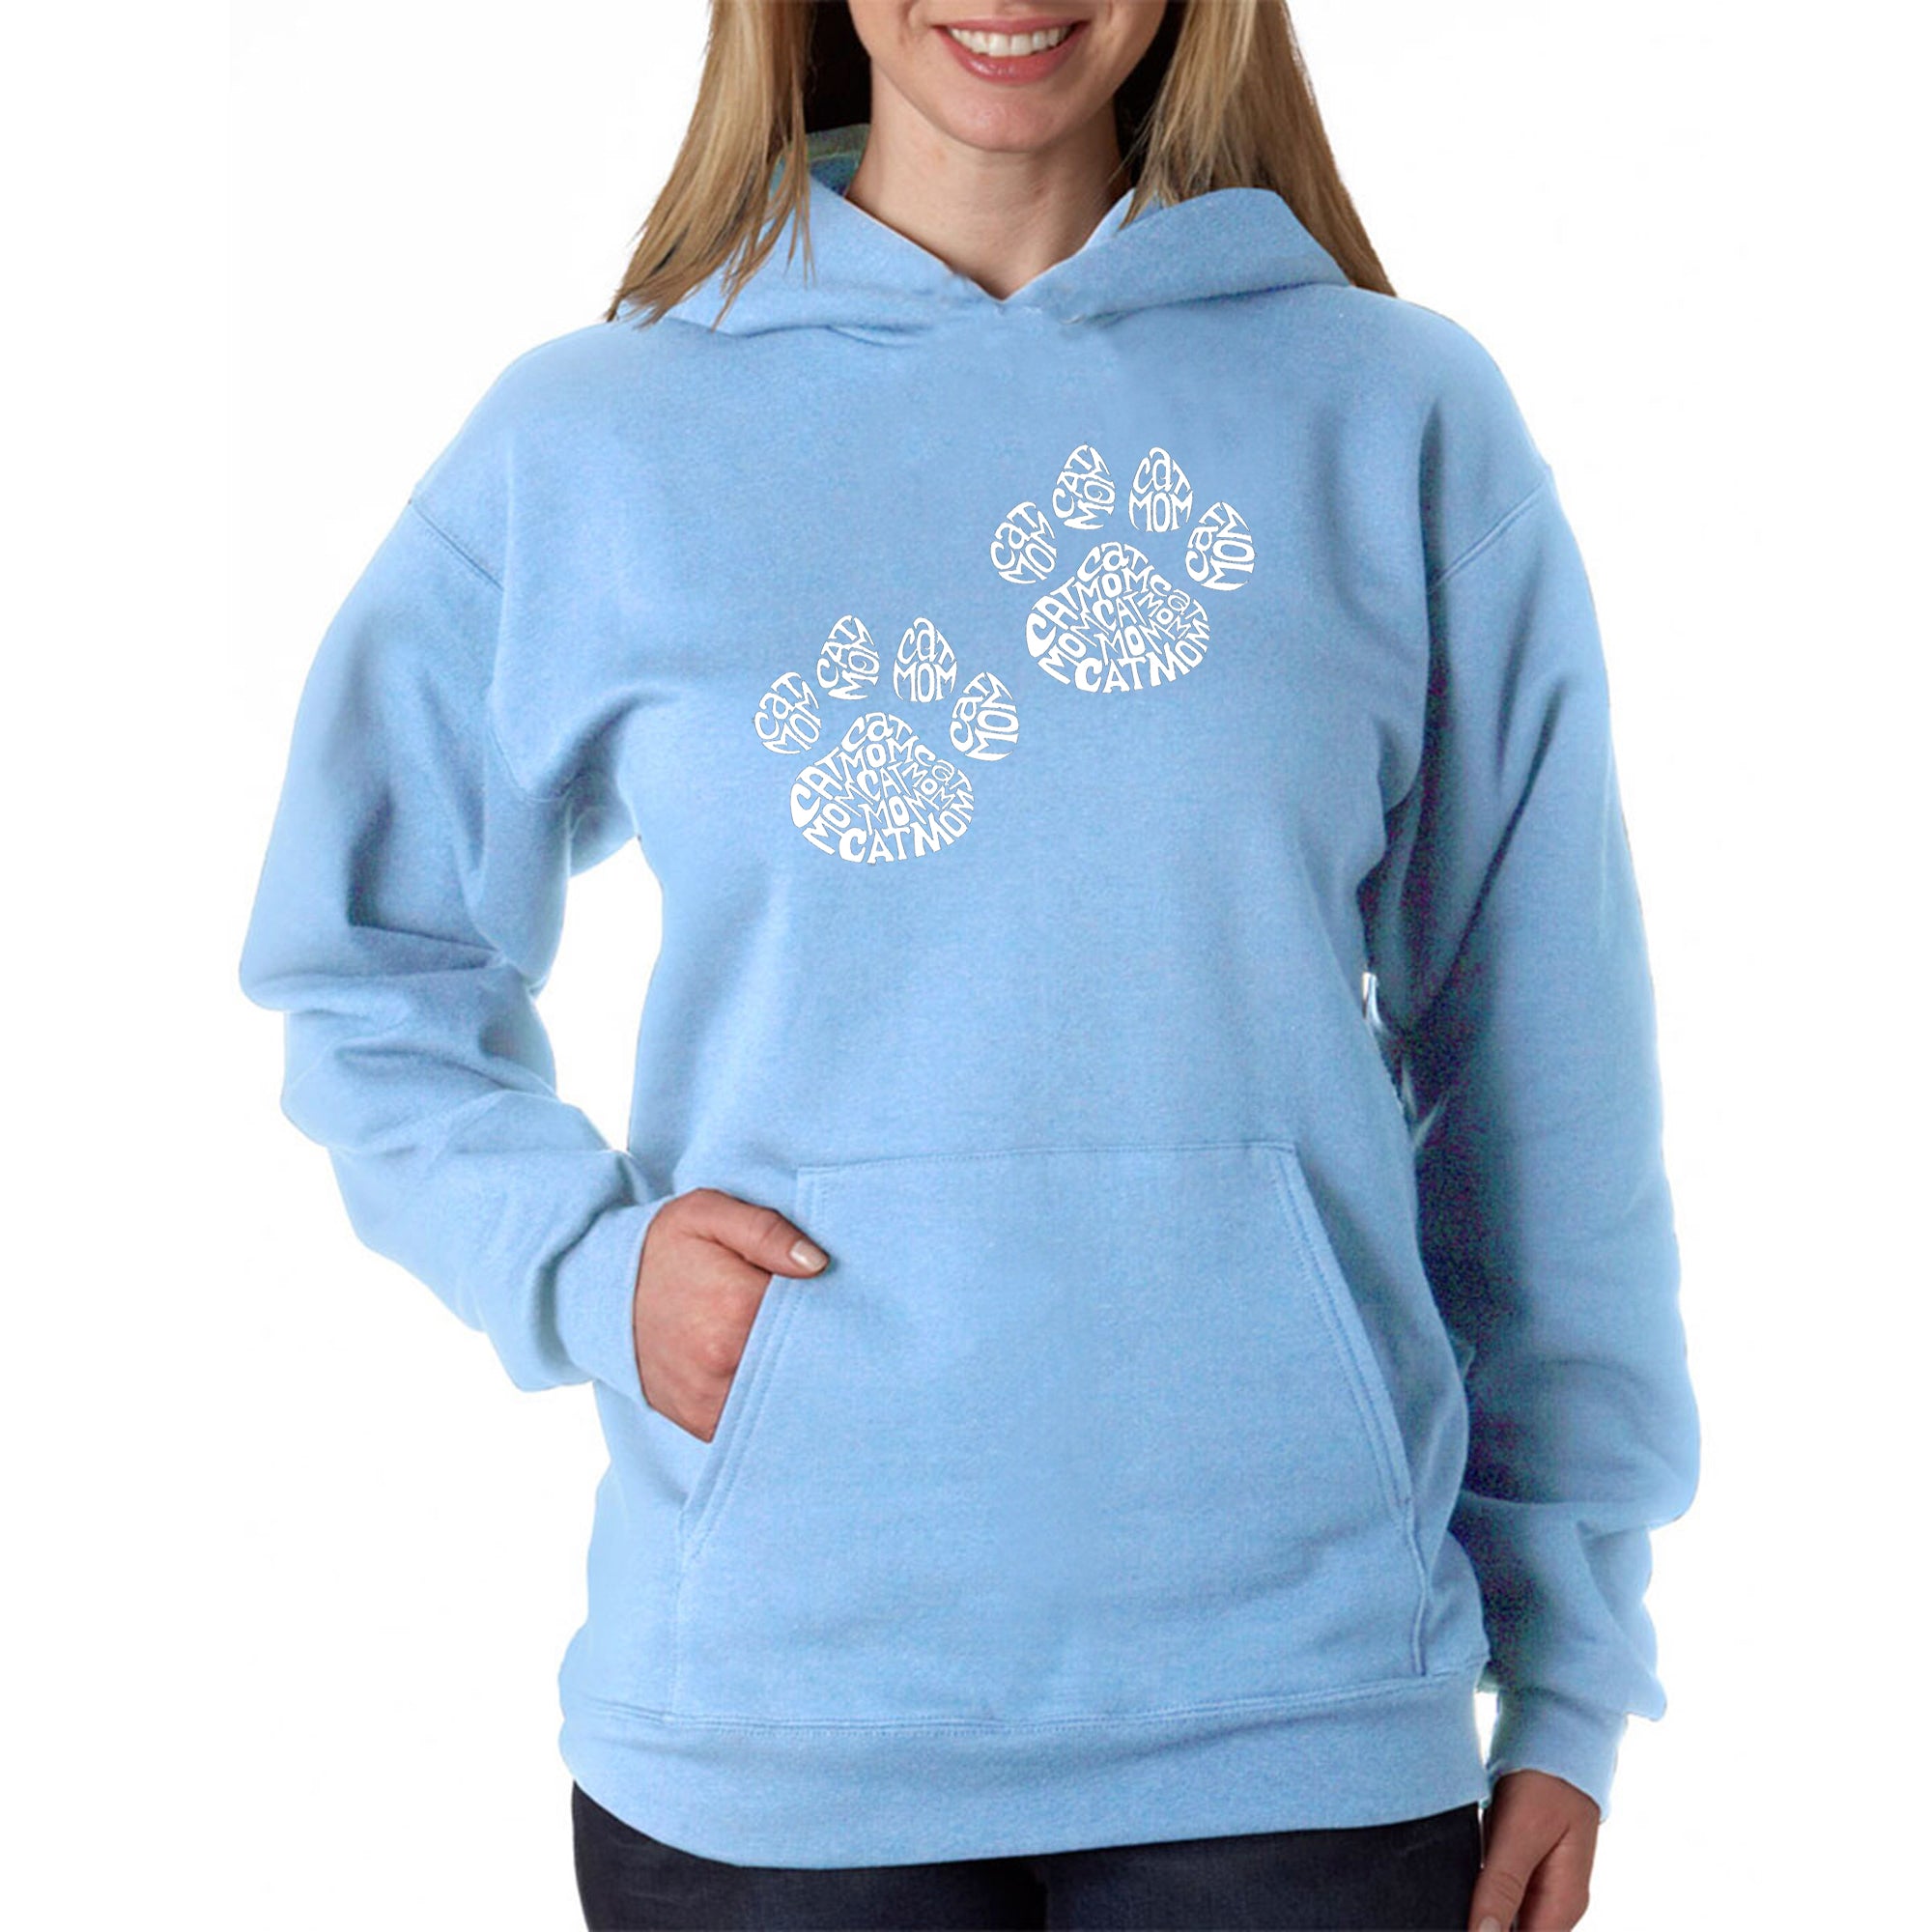 Cat Mom - Women's Word Art Hooded Sweatshirt - Blue - Small